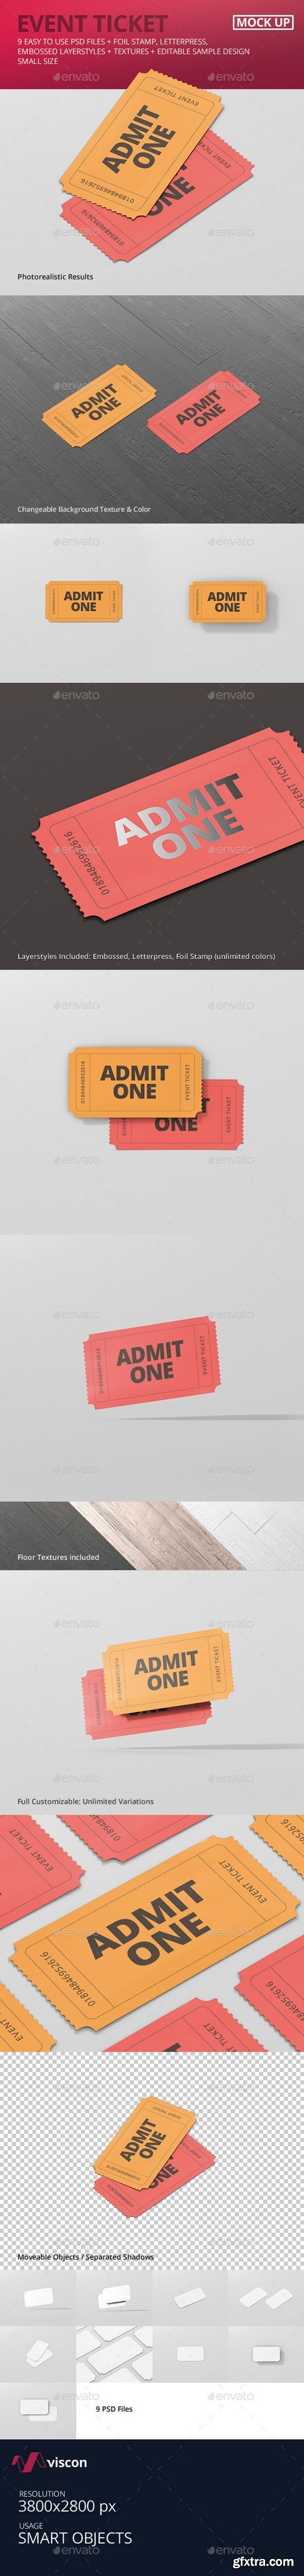 Graphicriver - Event Ticket Mockup - Small Size 21220927